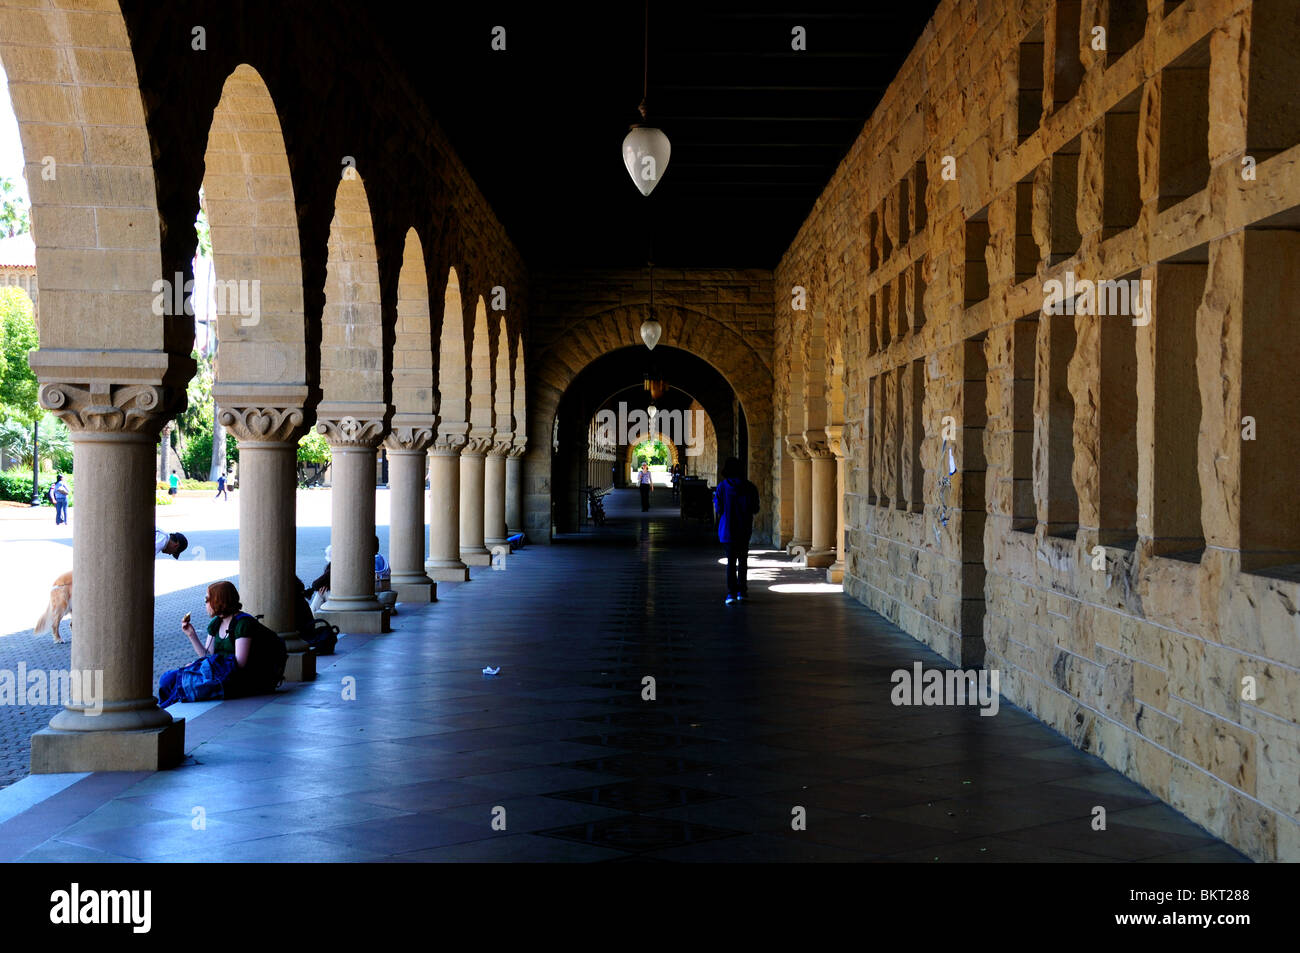 Corridor of sandstone building. Stanford University, Palo Alto, California, USA. Stock Photo